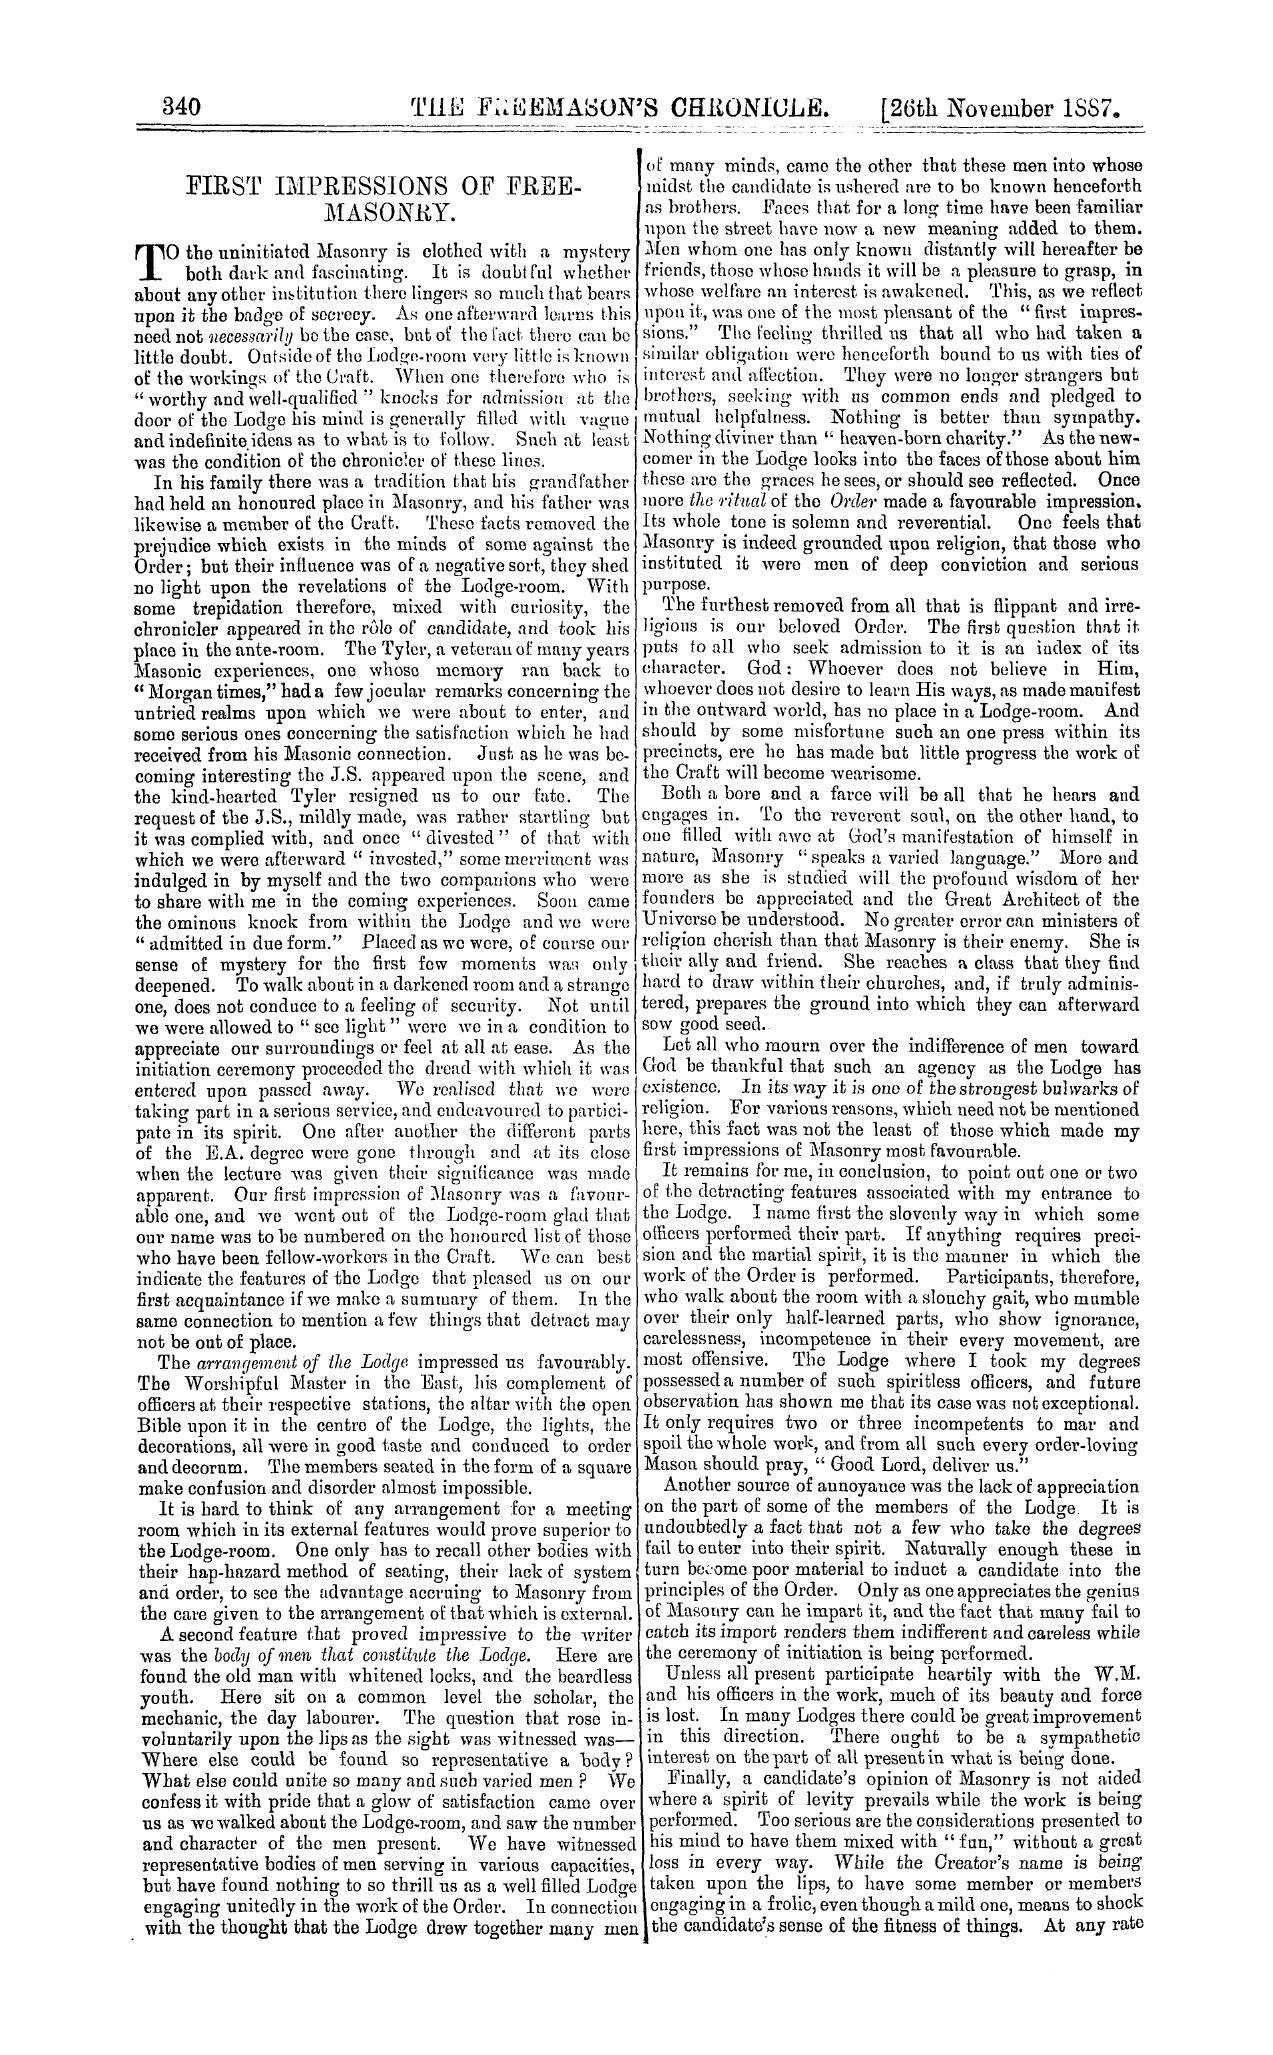 The Freemason's Chronicle: 1887-11-26 - First Impressions Of Freemasonry.